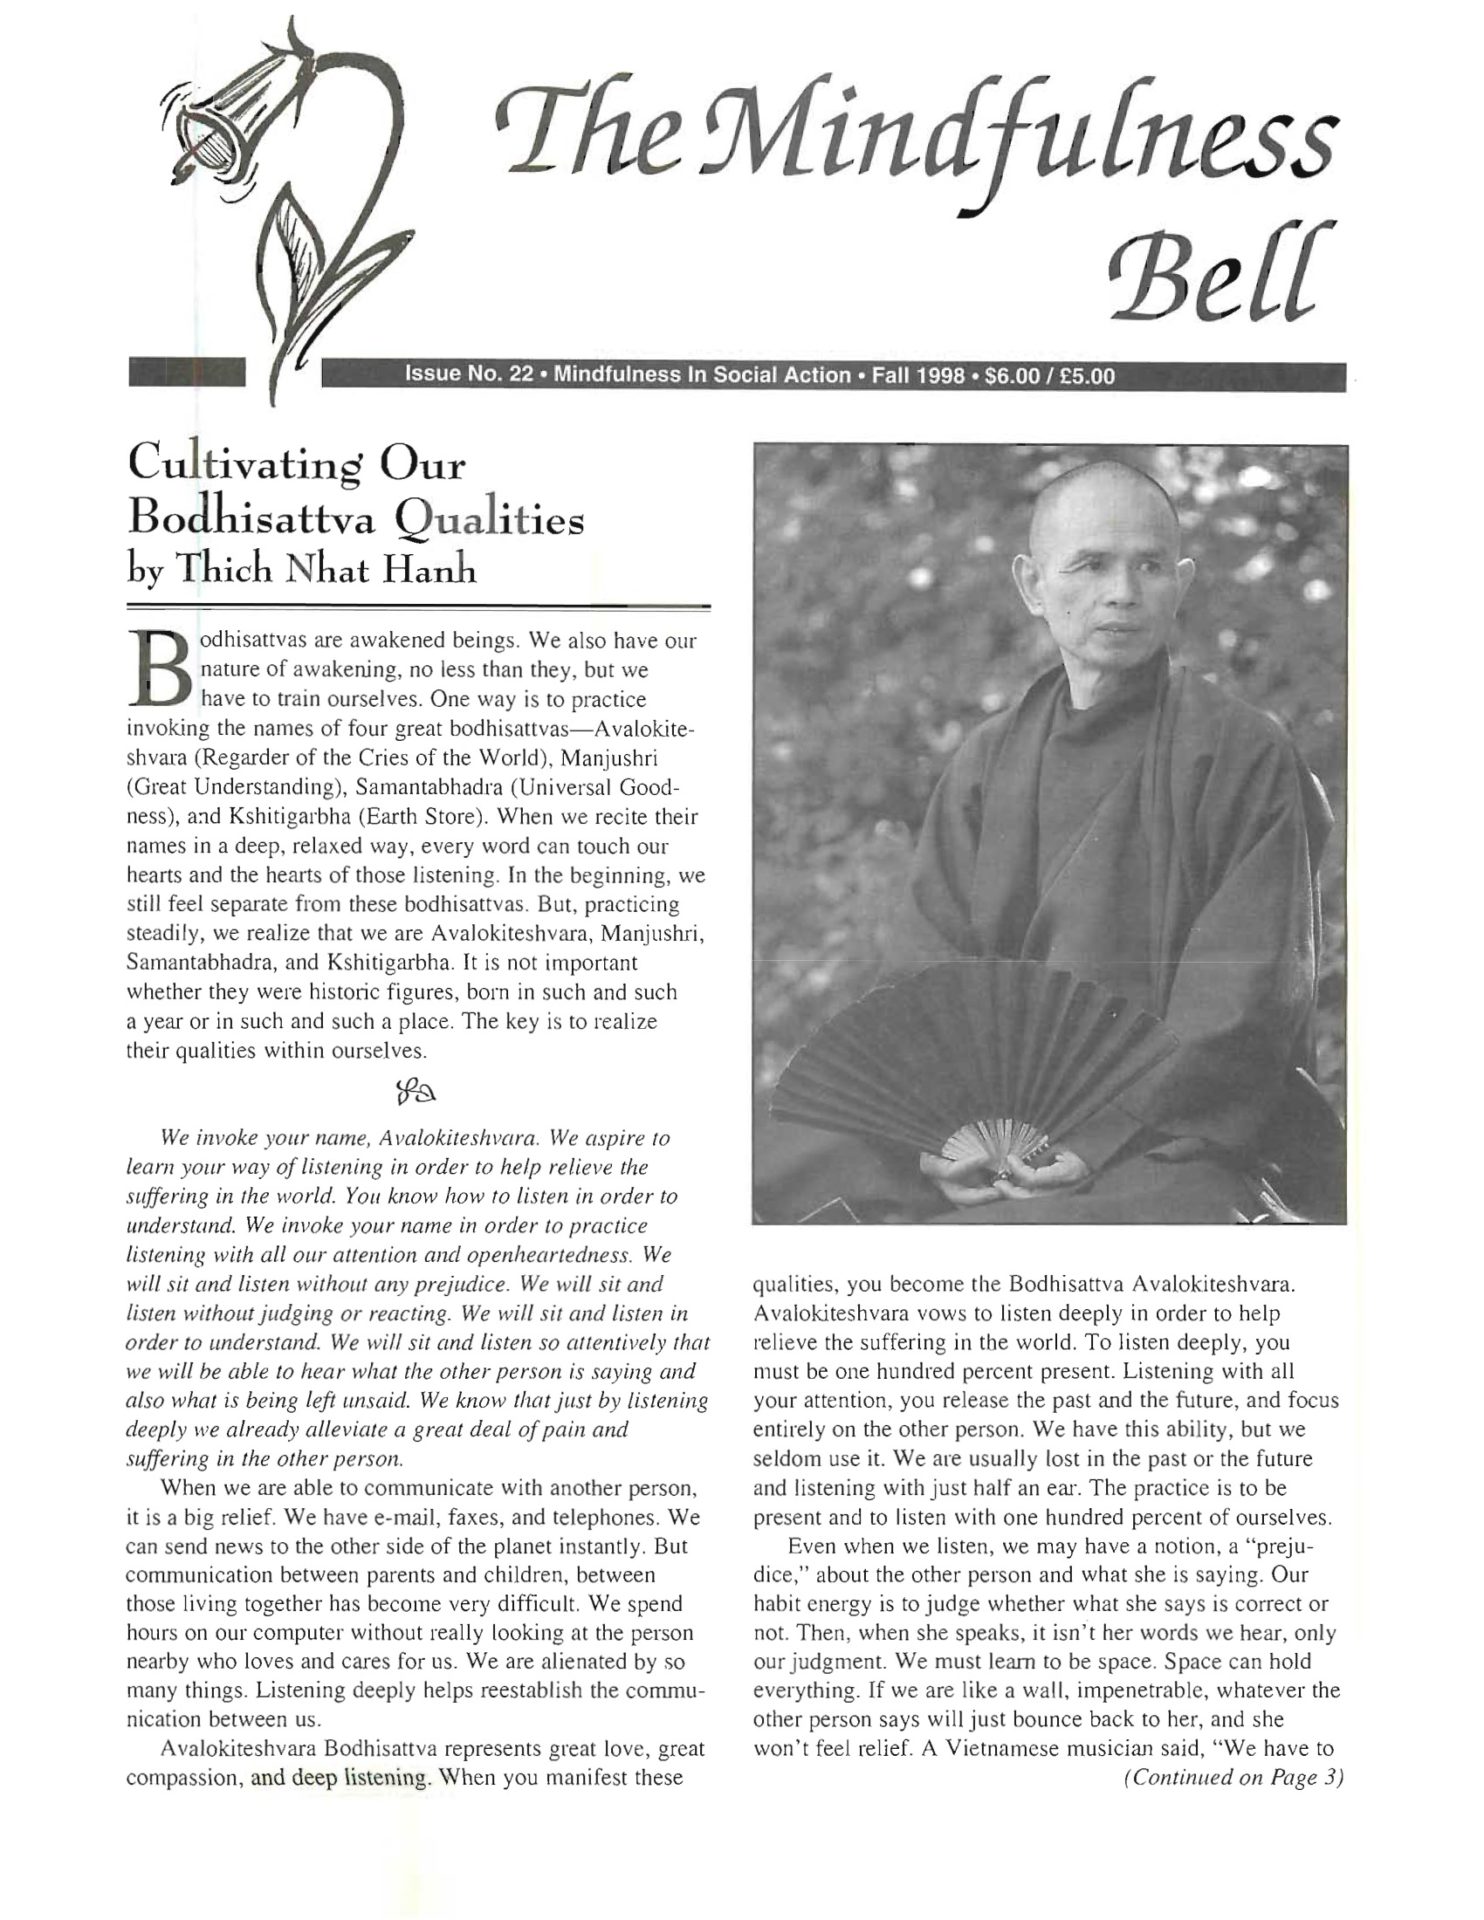 Mindfulness Bell #22